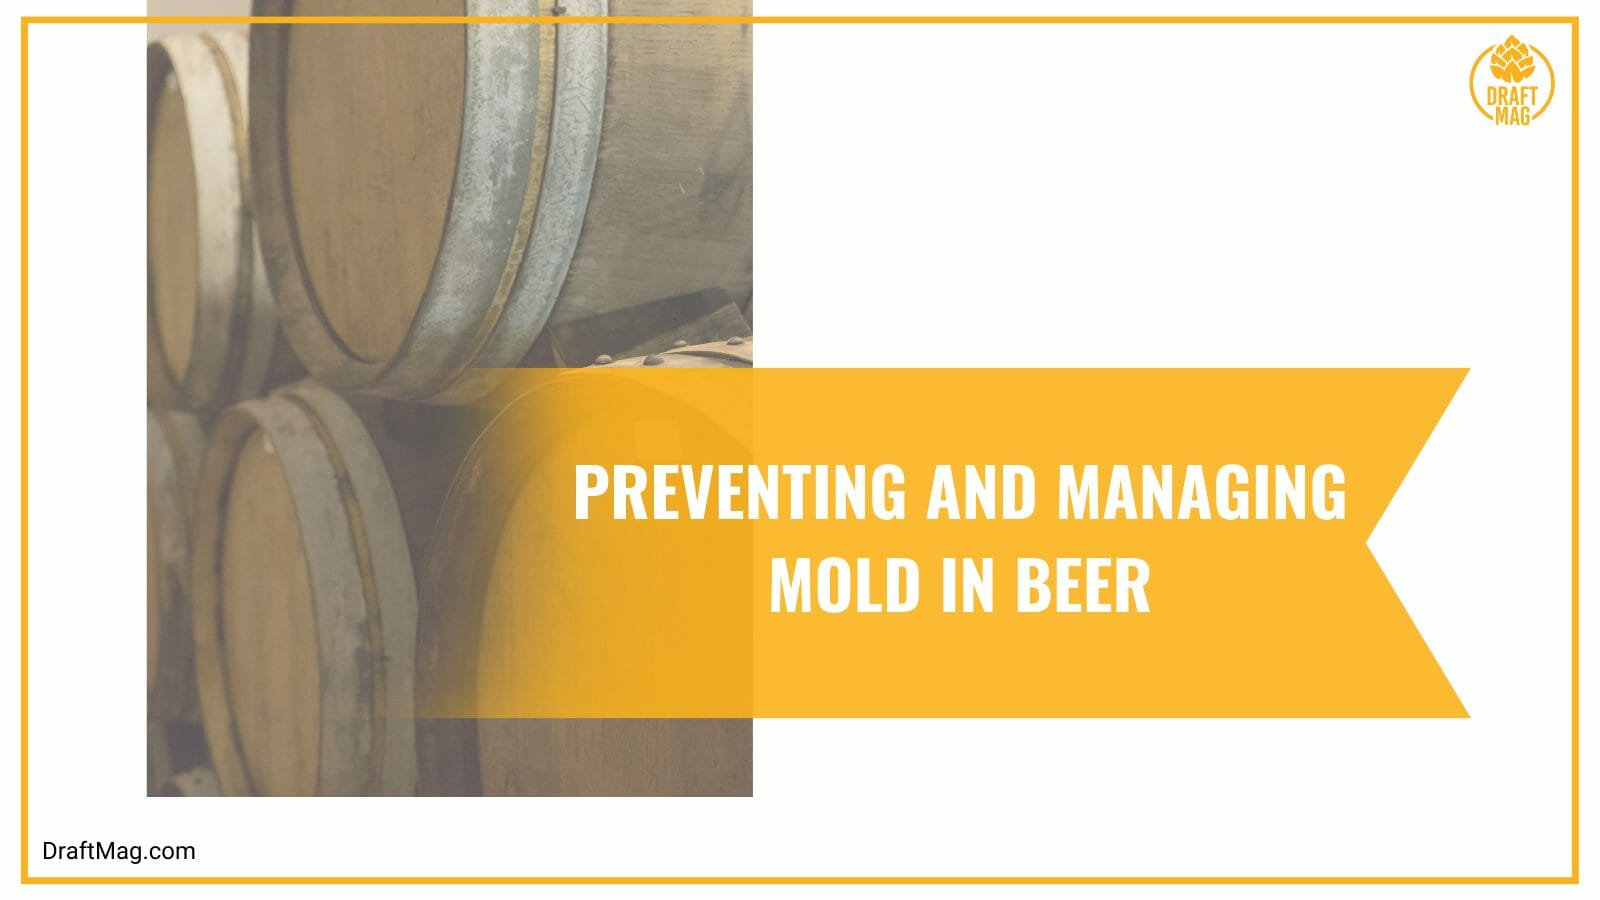 Managing mold in beer